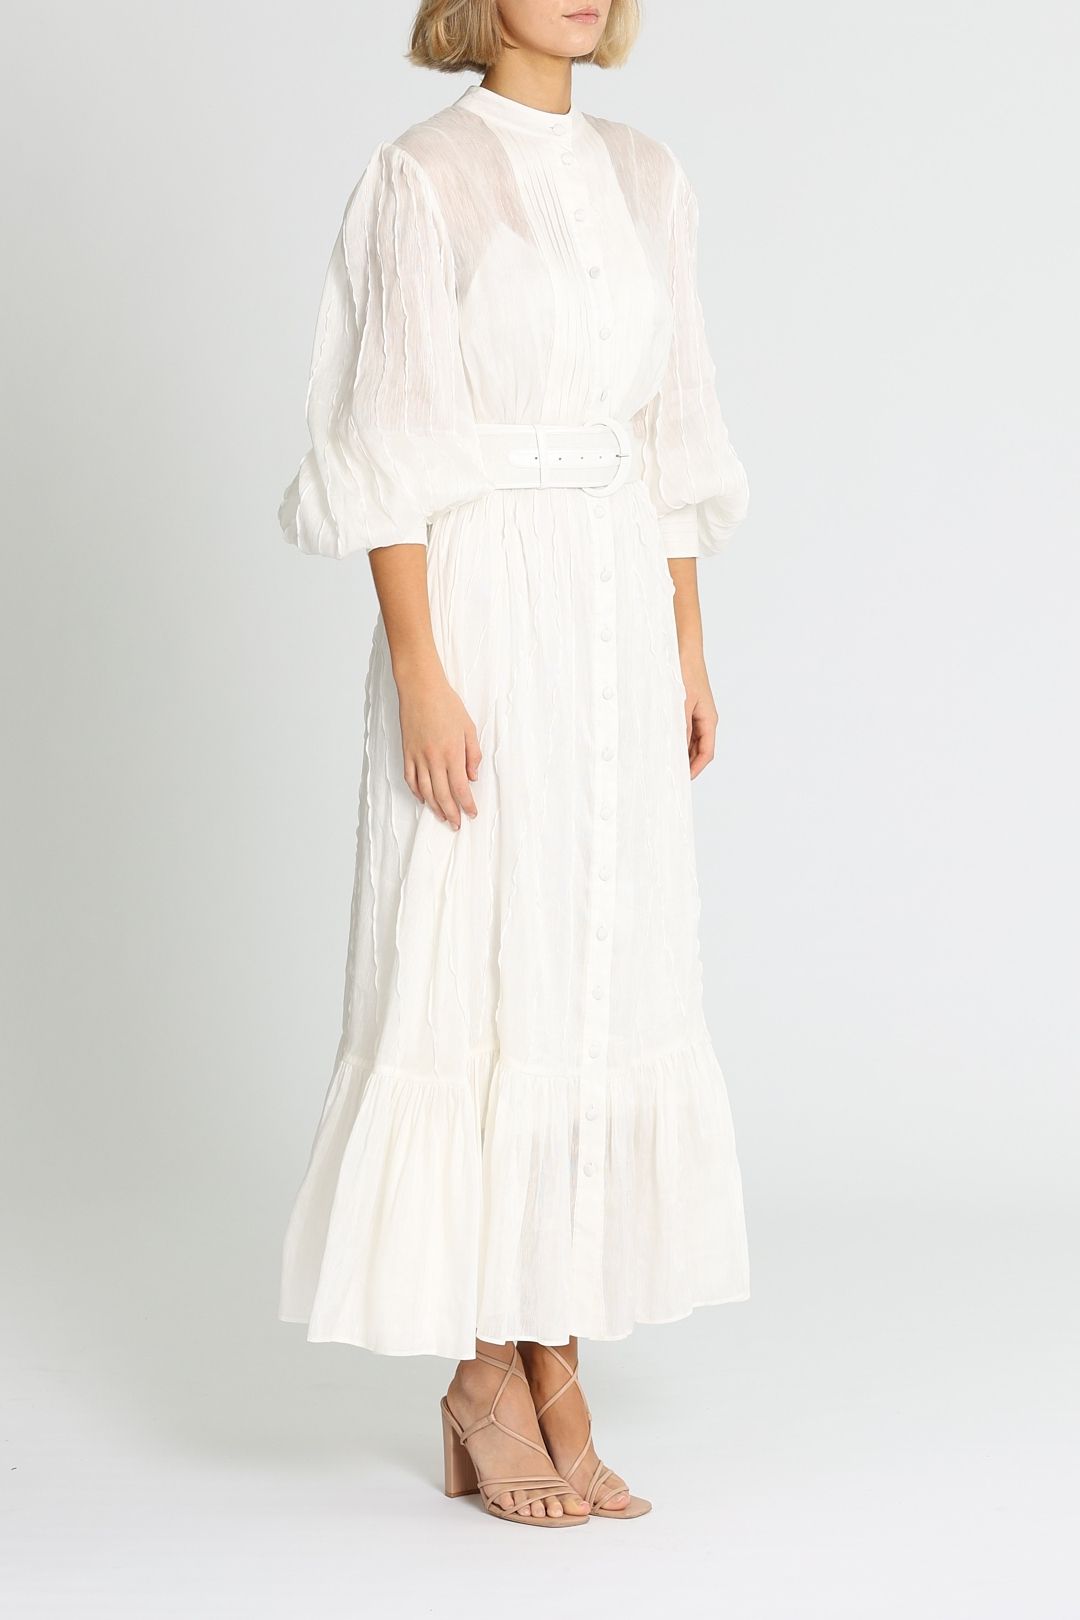 LEO LIN Cambridge Dress White High Neckline